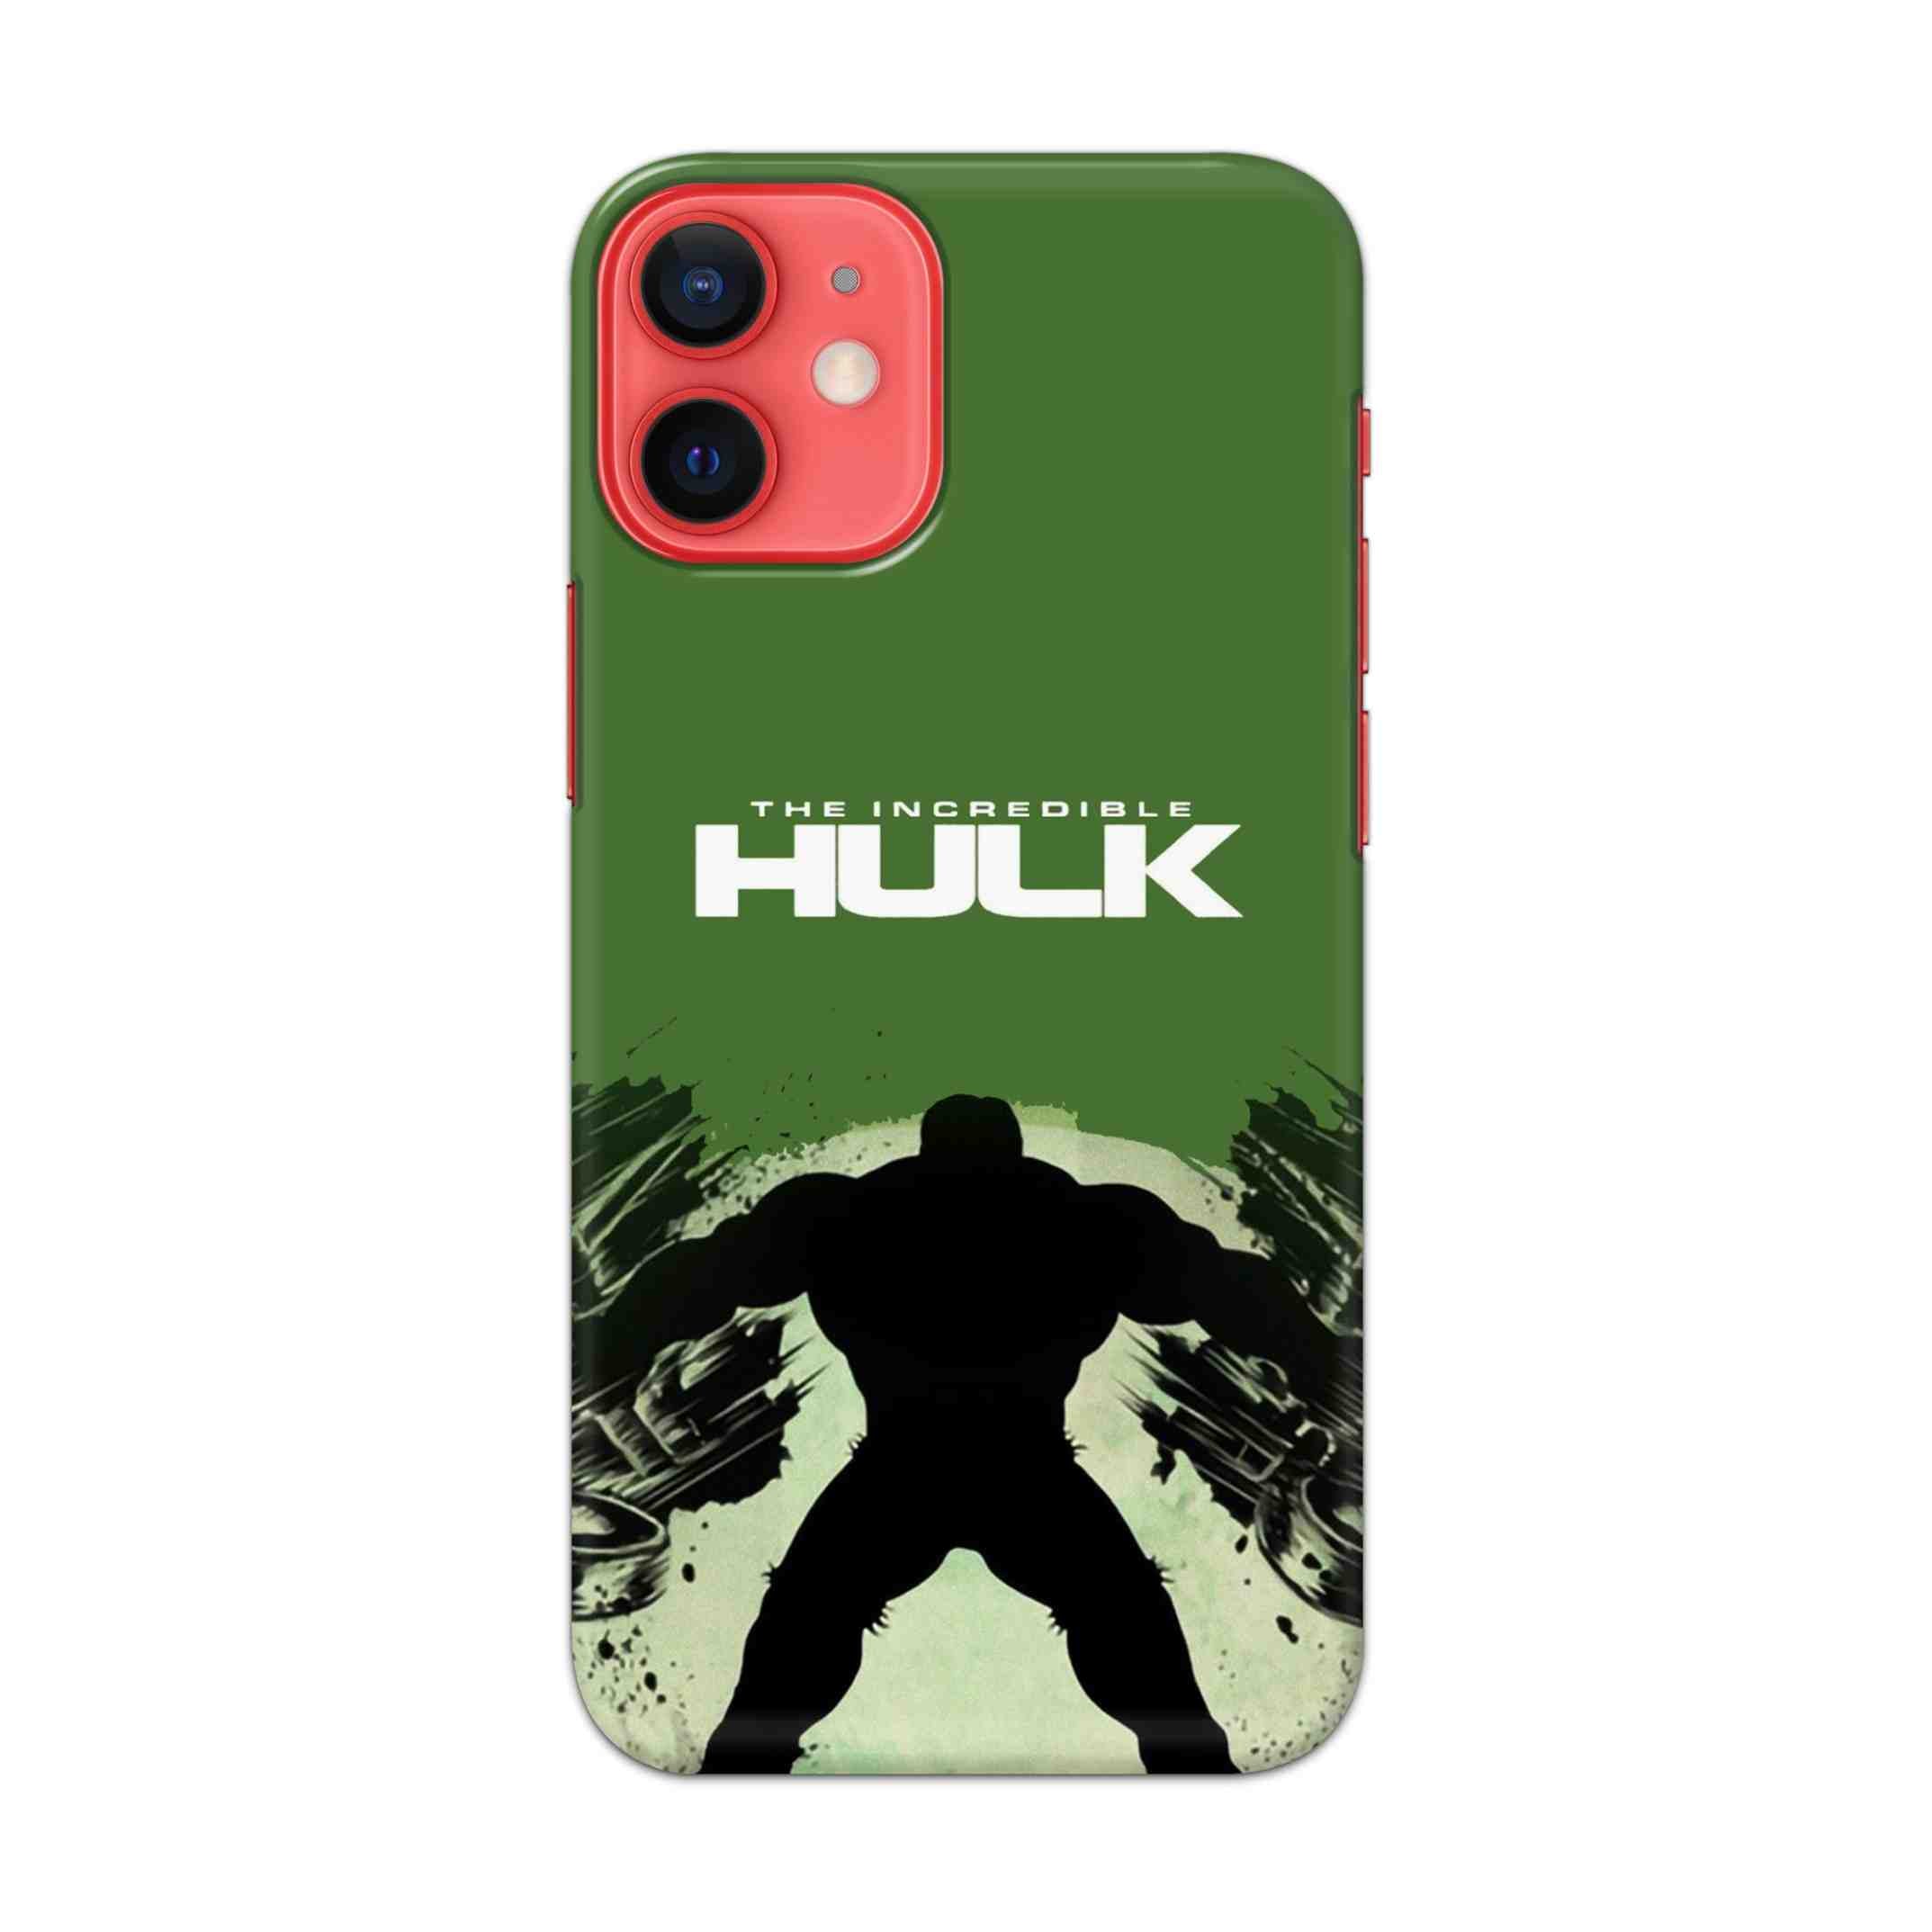 Buy Hulk Hard Back Mobile Phone Case/Cover For Apple iPhone 12 mini Online